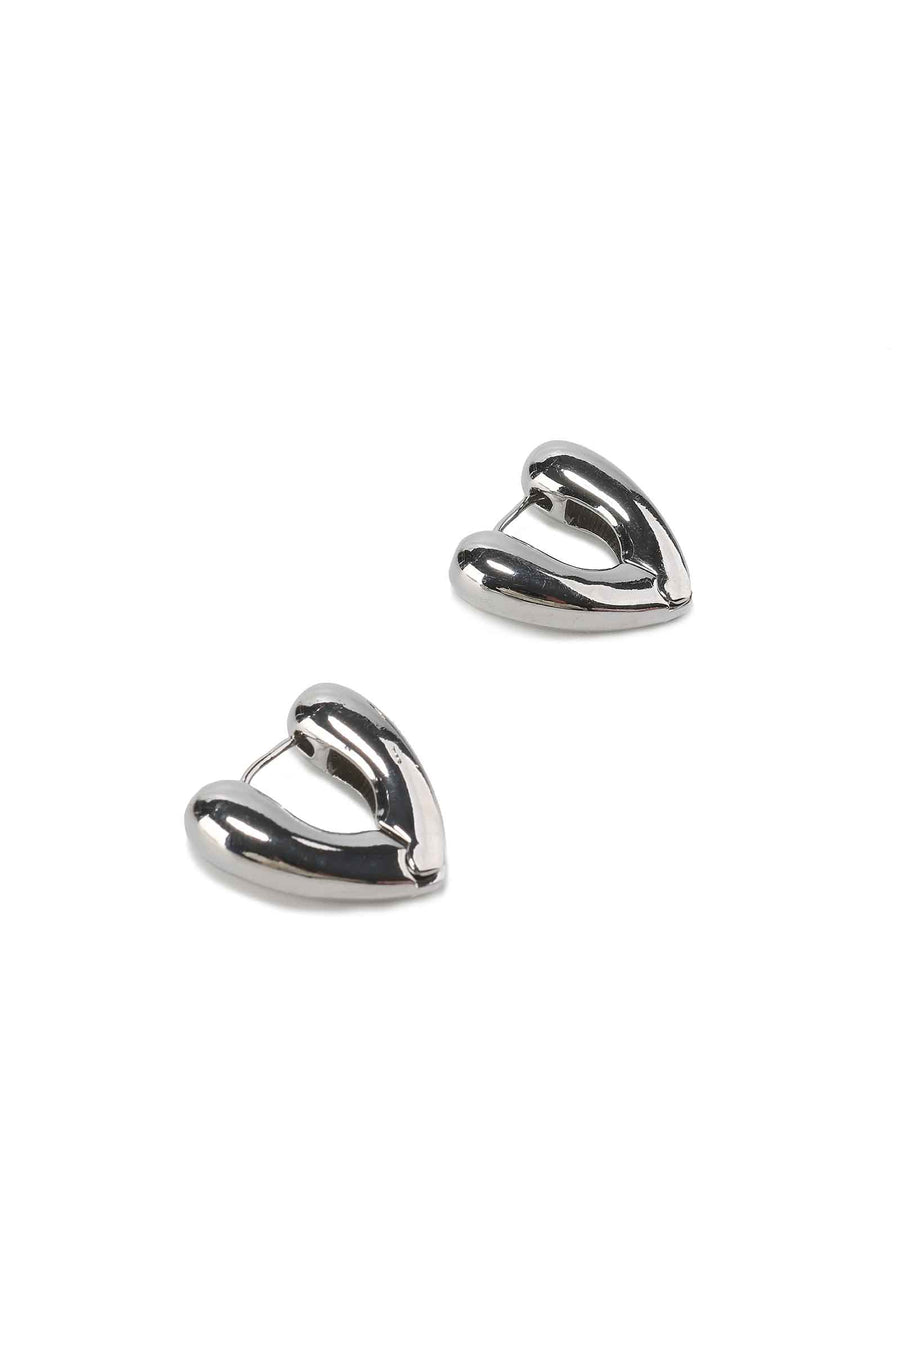 Annalise Earrings - 925 Sterling Silver